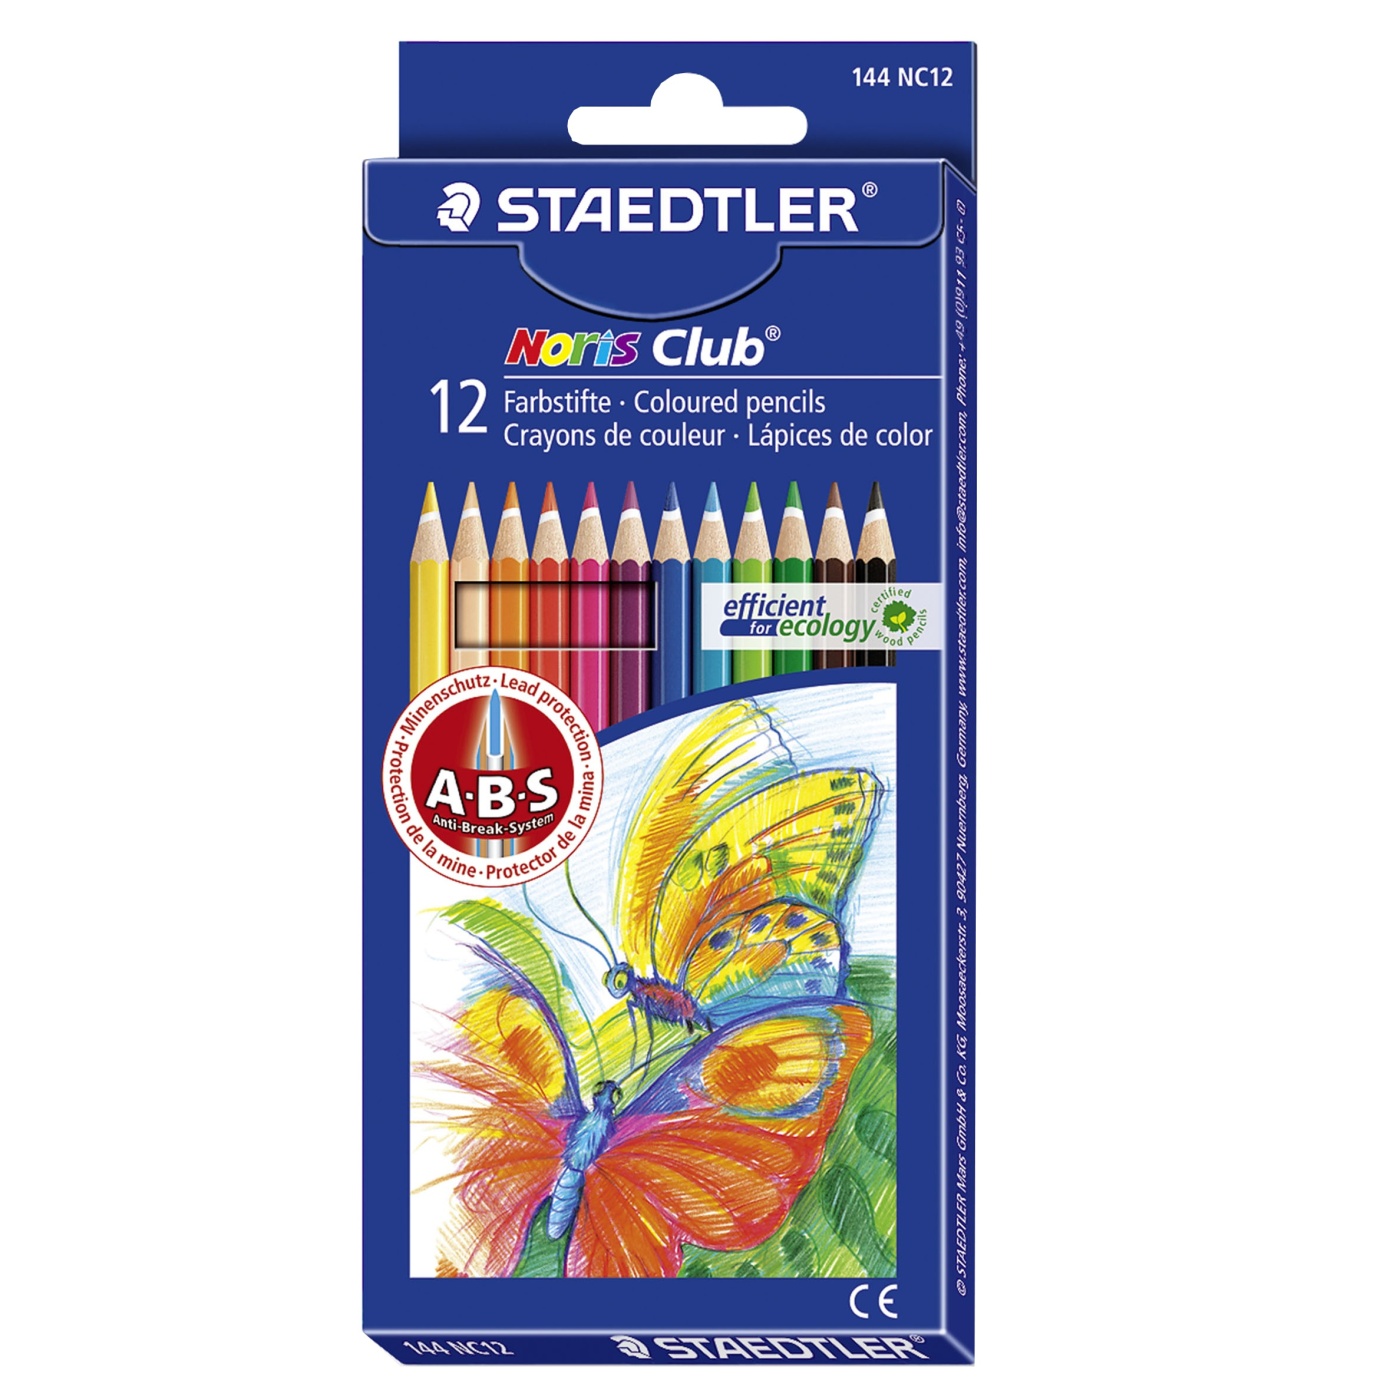 Staedtler Noris Club colored pencils 12-pack | Pen Store